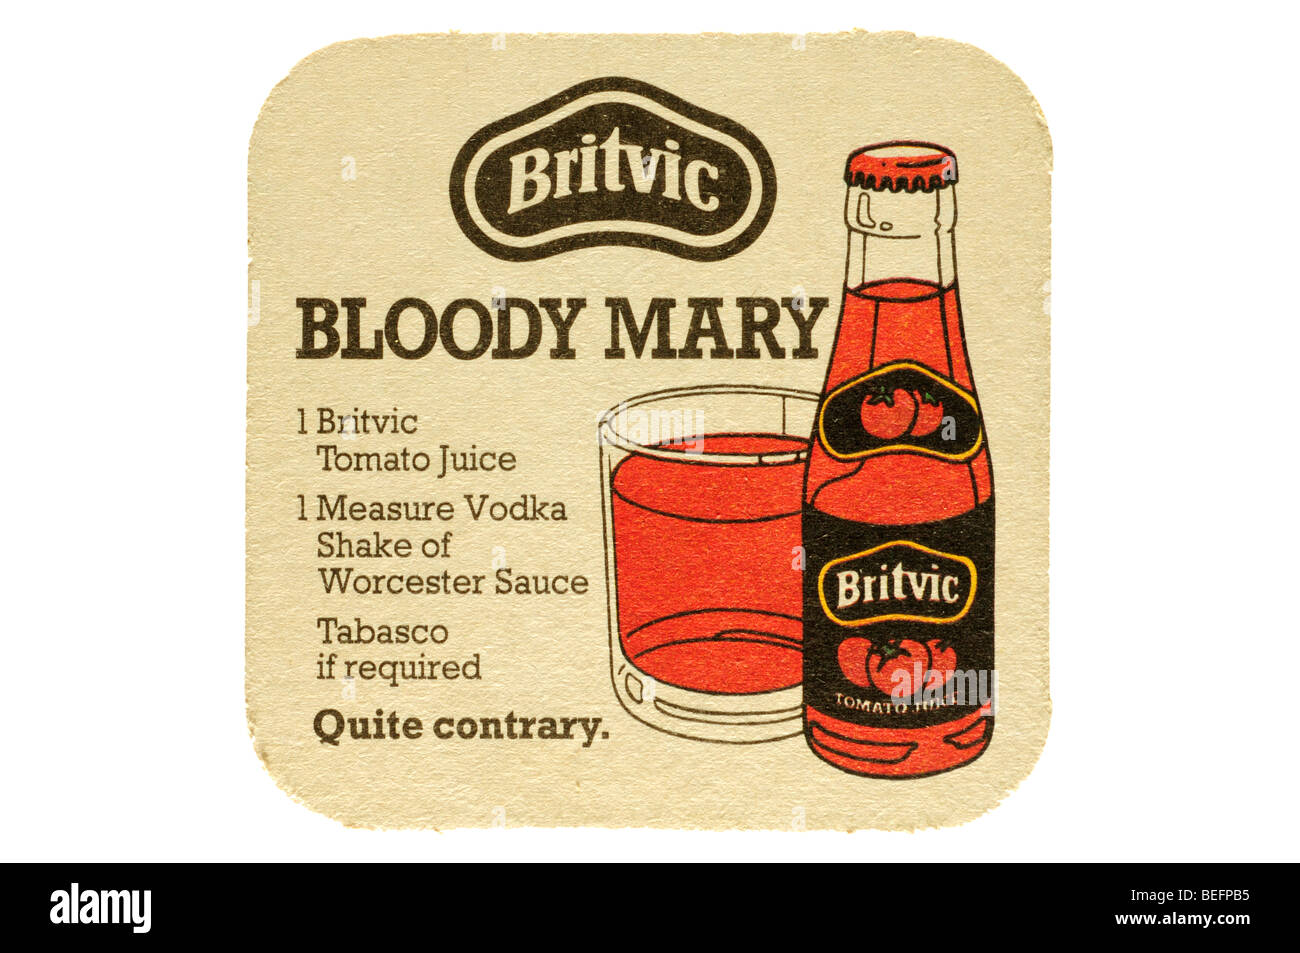 britvic bloody mary 1 britvic tomato juice 1 measure vodka shake ...